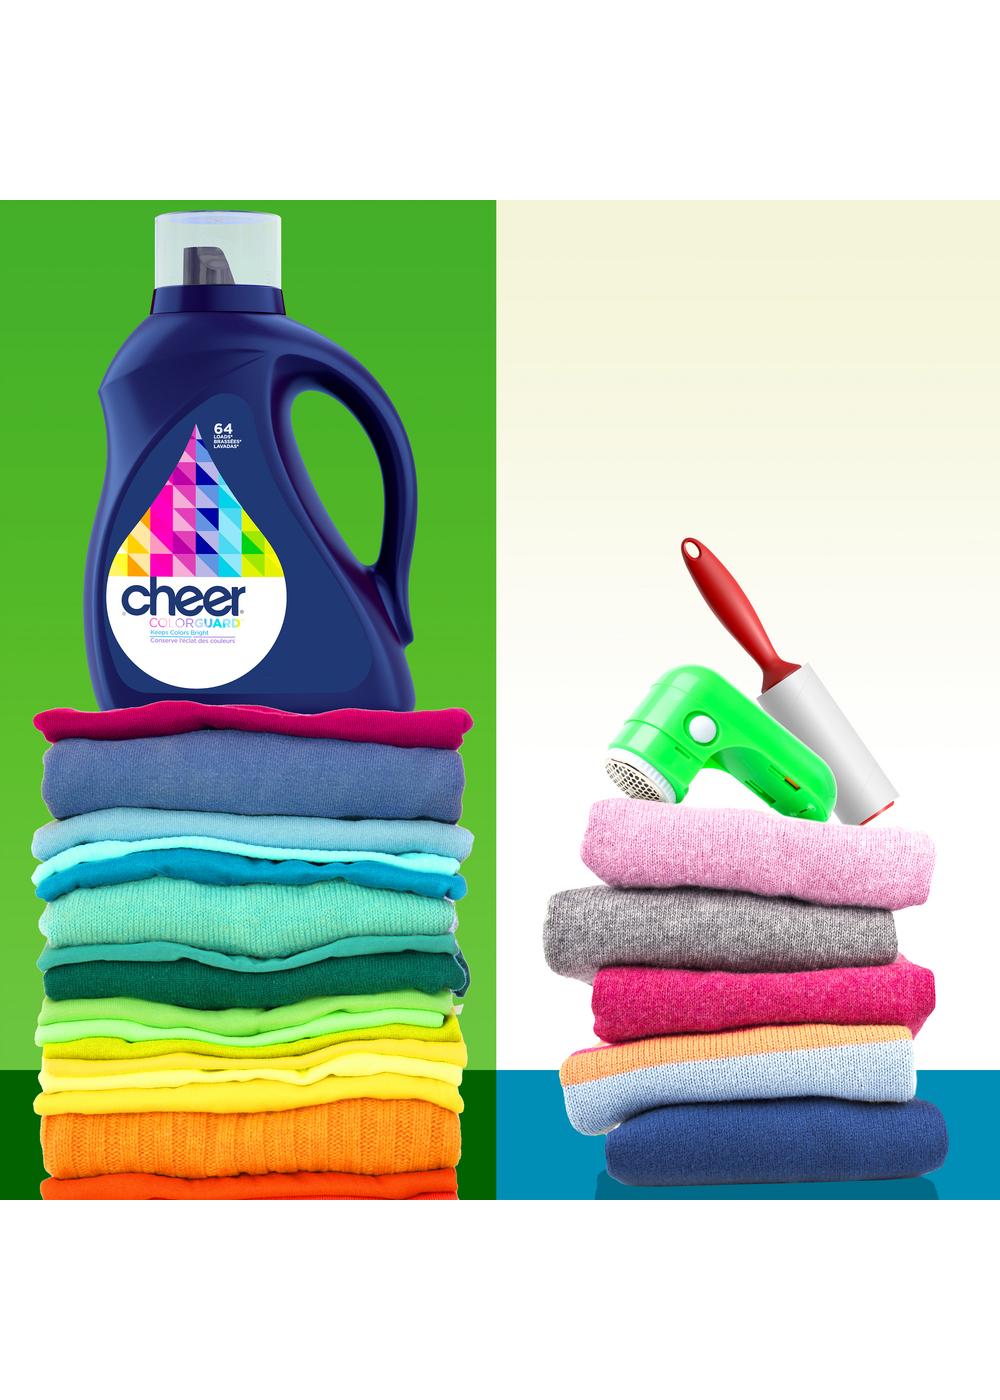 Cheer Colorguard HE Liquid Laundry Detergent, 107 Loads; image 4 of 6